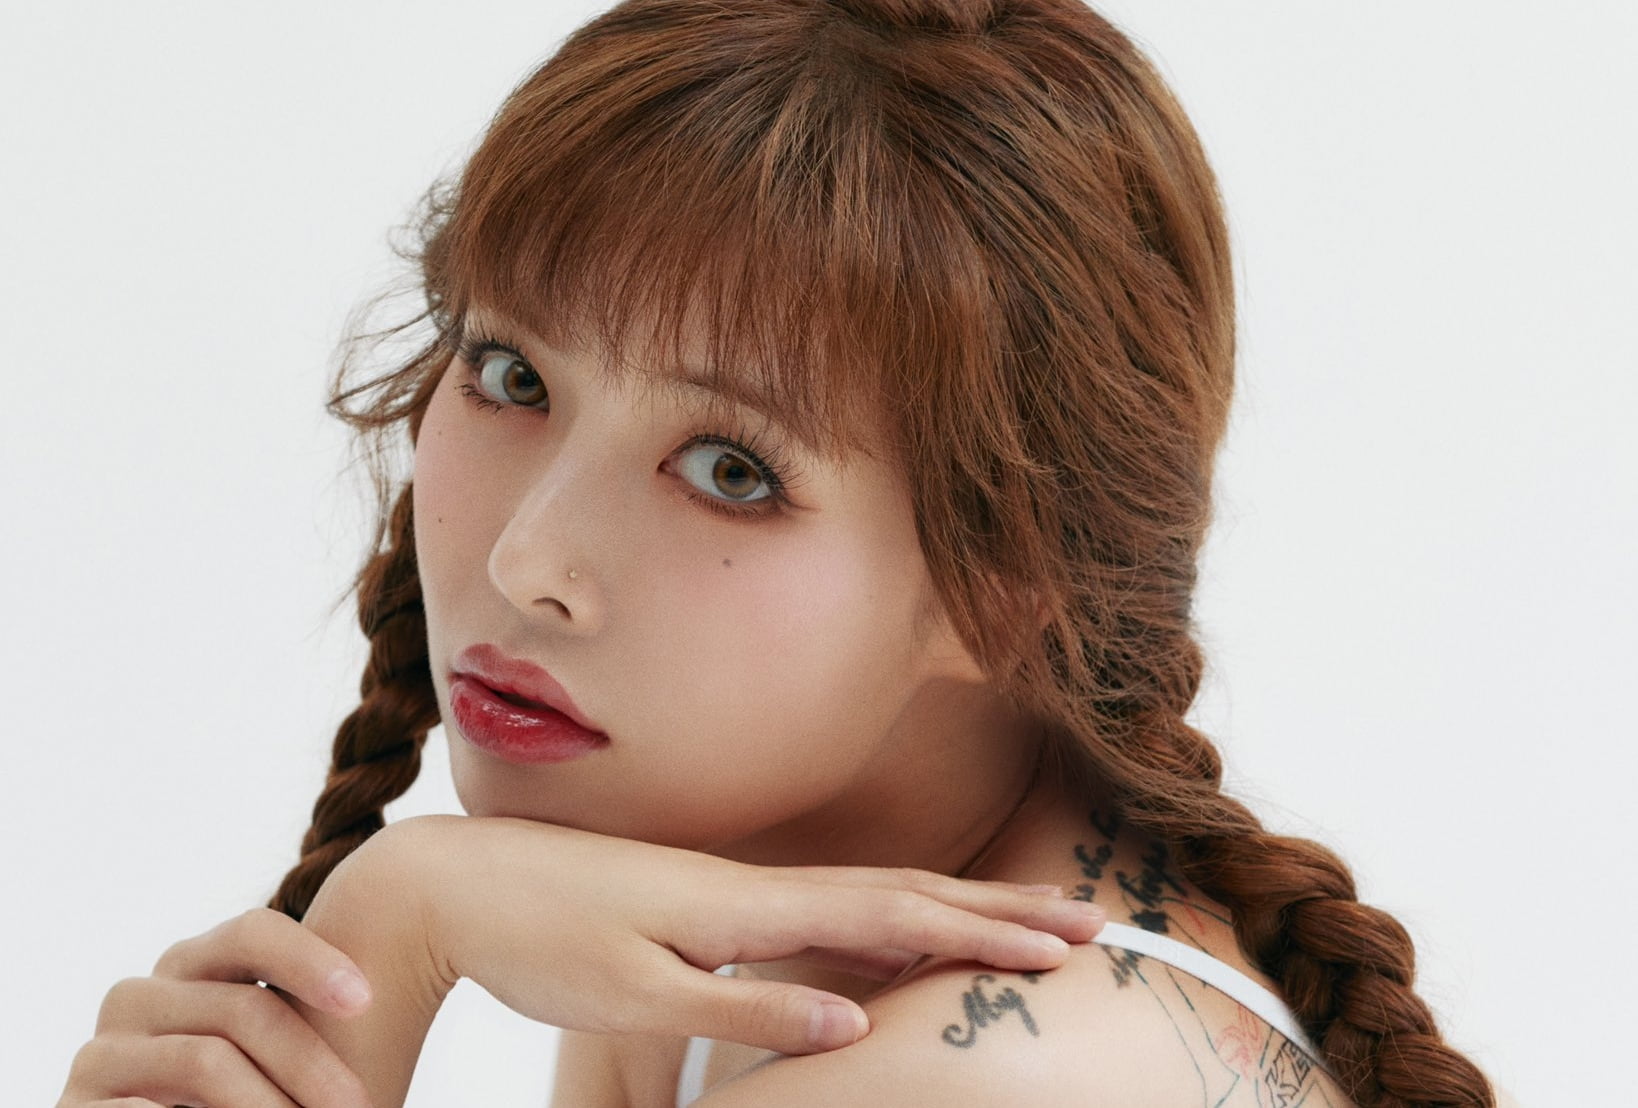 HyunA Drops Bold New Profile Photos to Signal Fresh Start